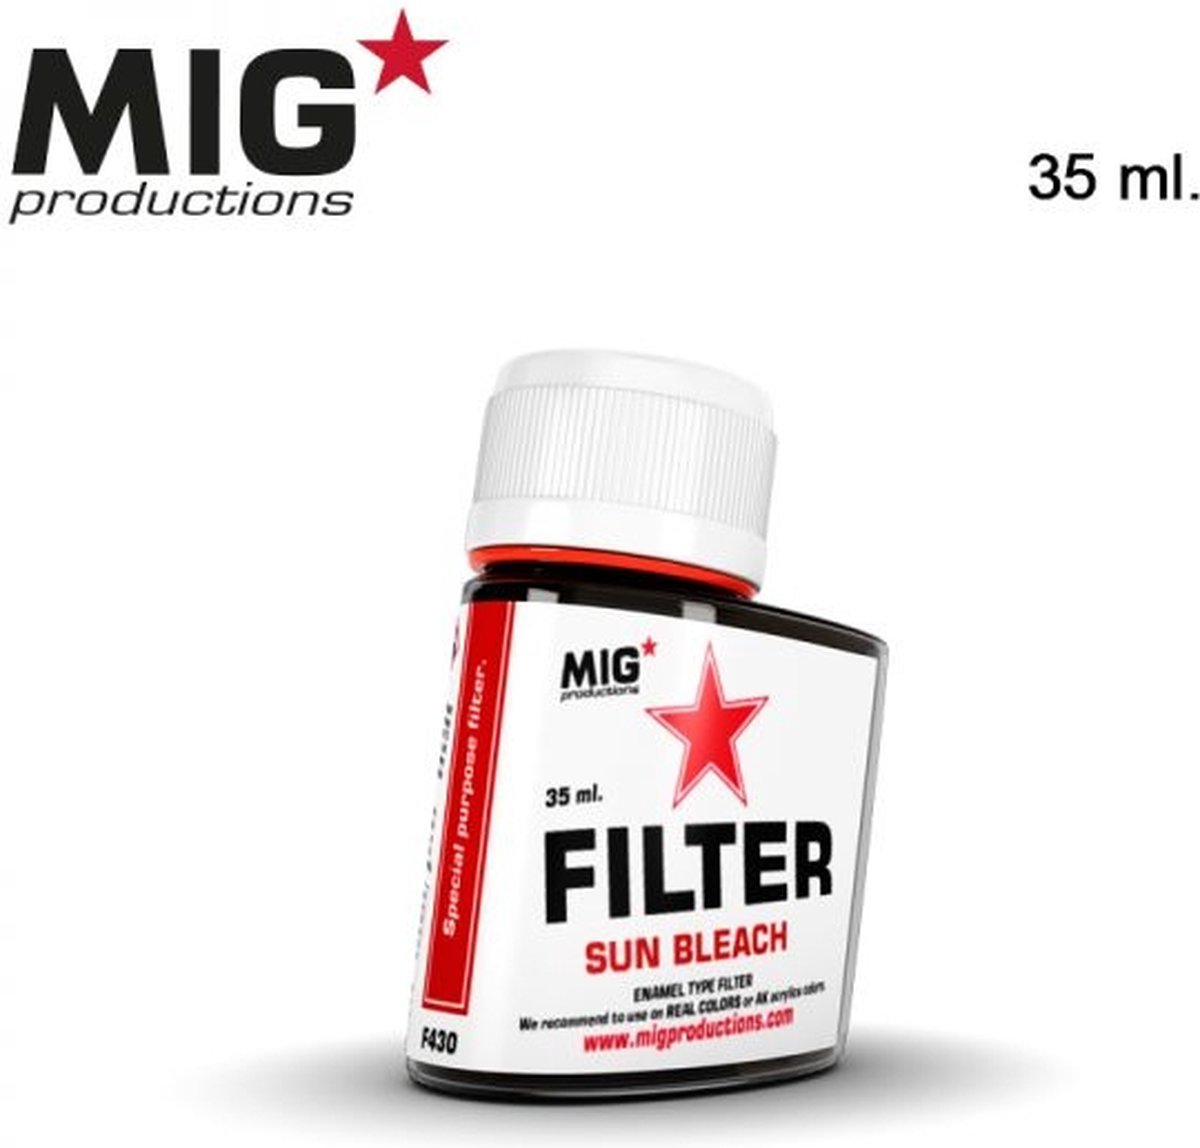 MIG Productions - F430 - Sun Bleach Filter - 35ml -